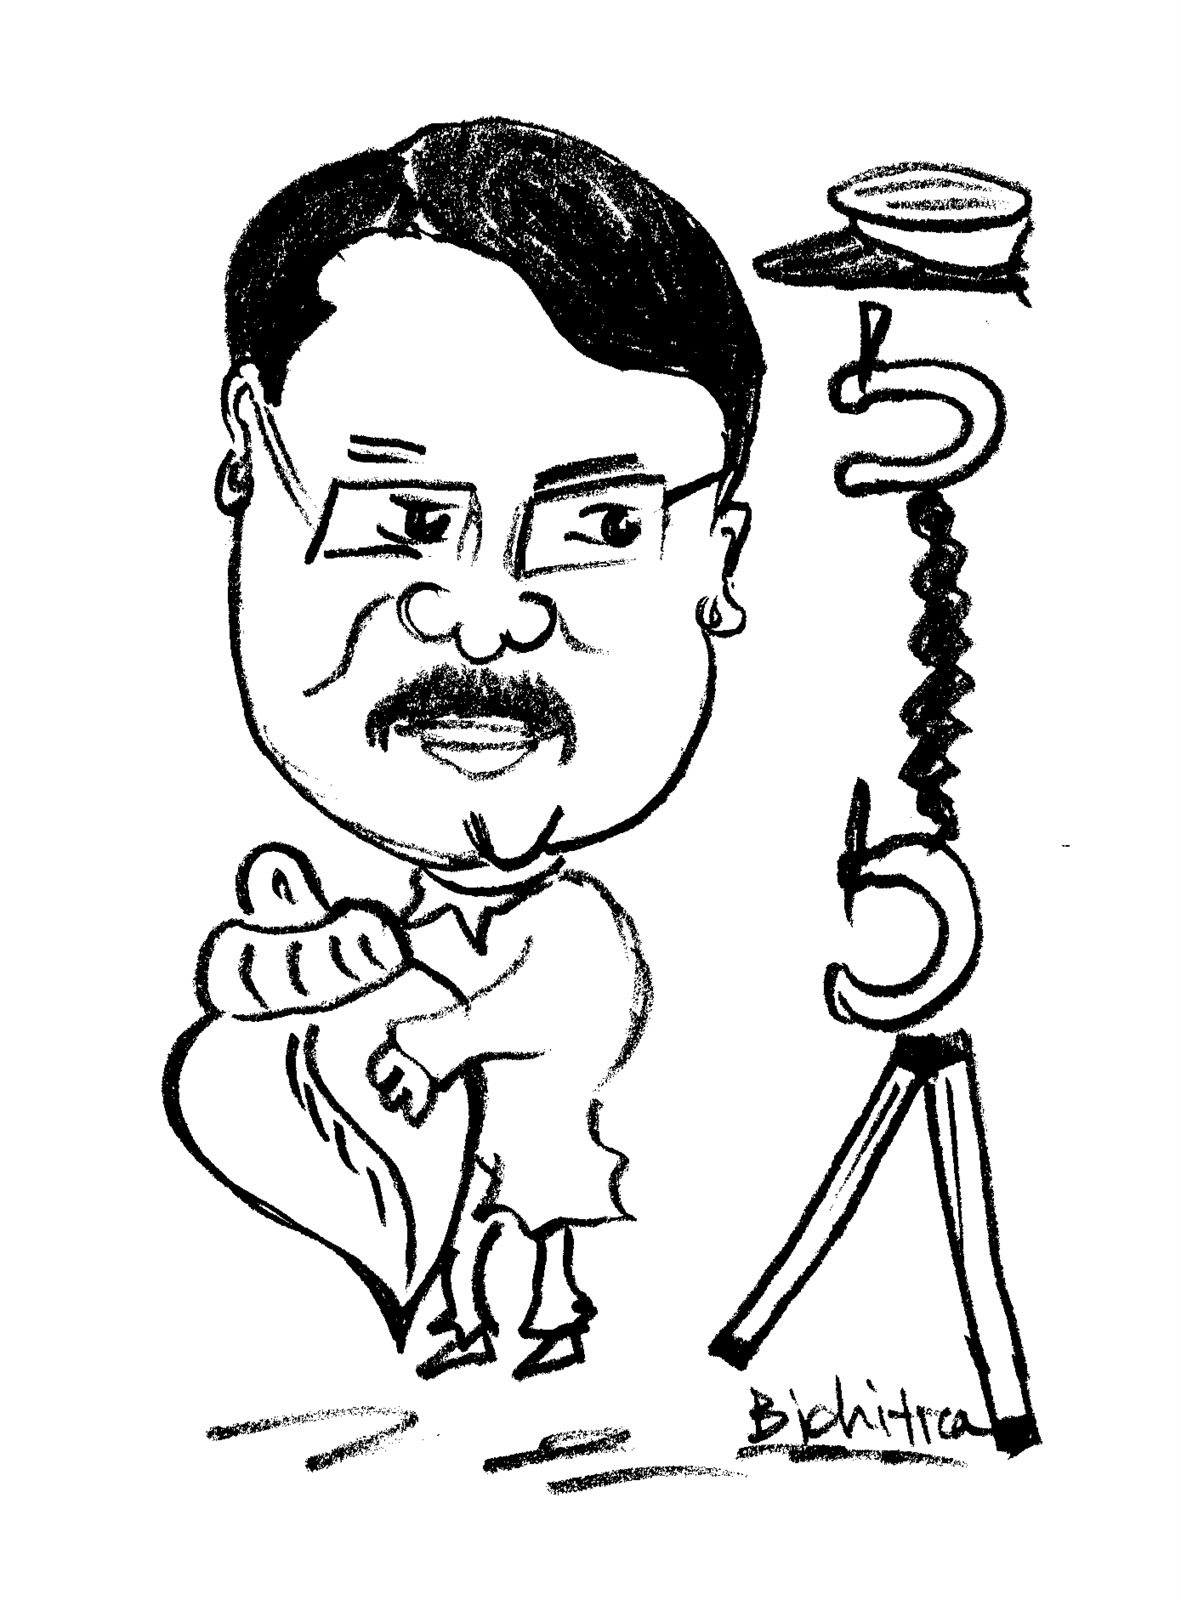 ODISHA ODIA PUA: political cartoon of ODISHA AND INDIA by Bichitra swain,  chitra bichitra